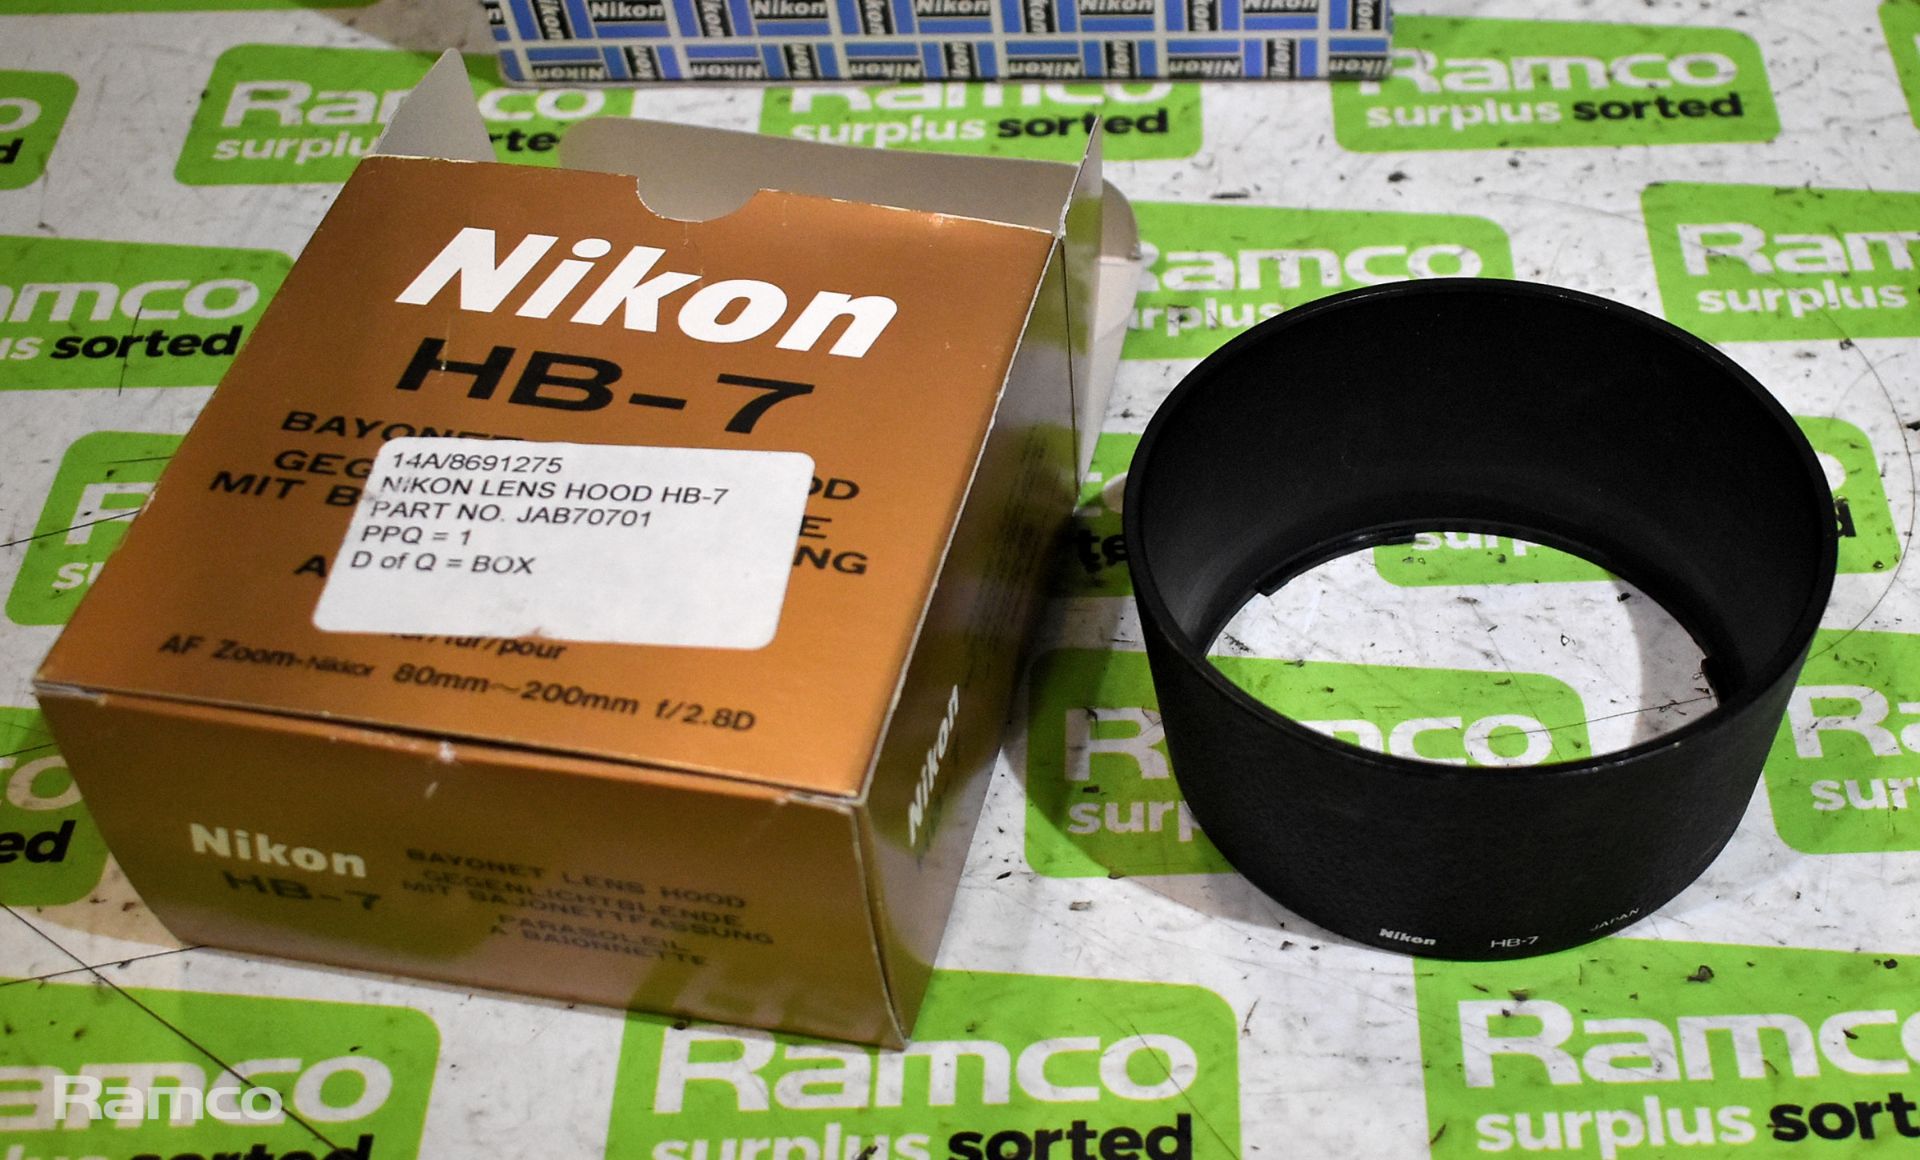 2x Nikon SK-6A power bracket units, 2x Nikon HB-7 bayonet lens hoods - Image 2 of 6